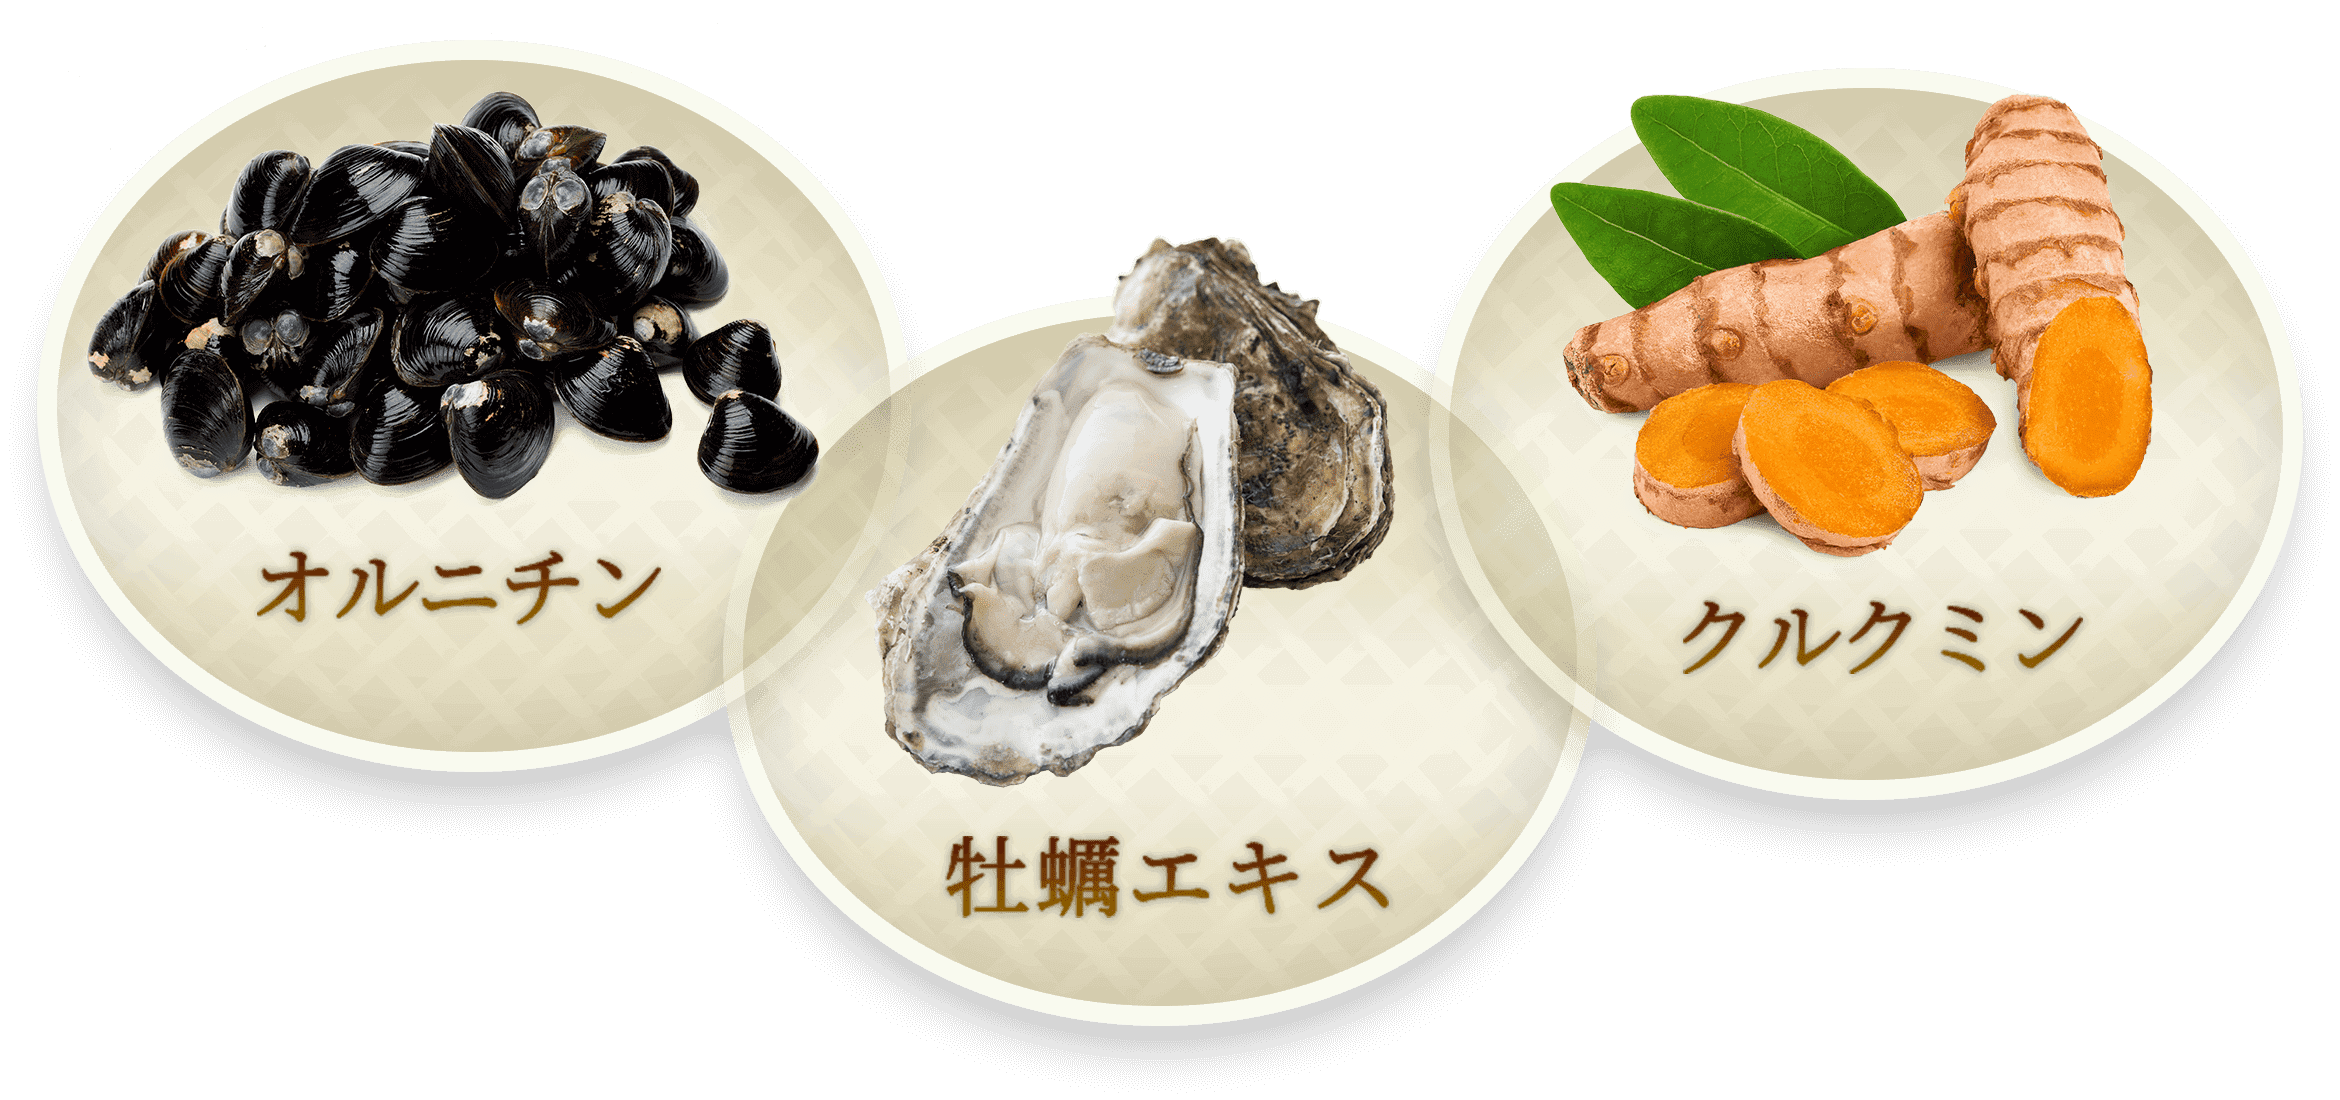 Ornithine oyster extract curcumin